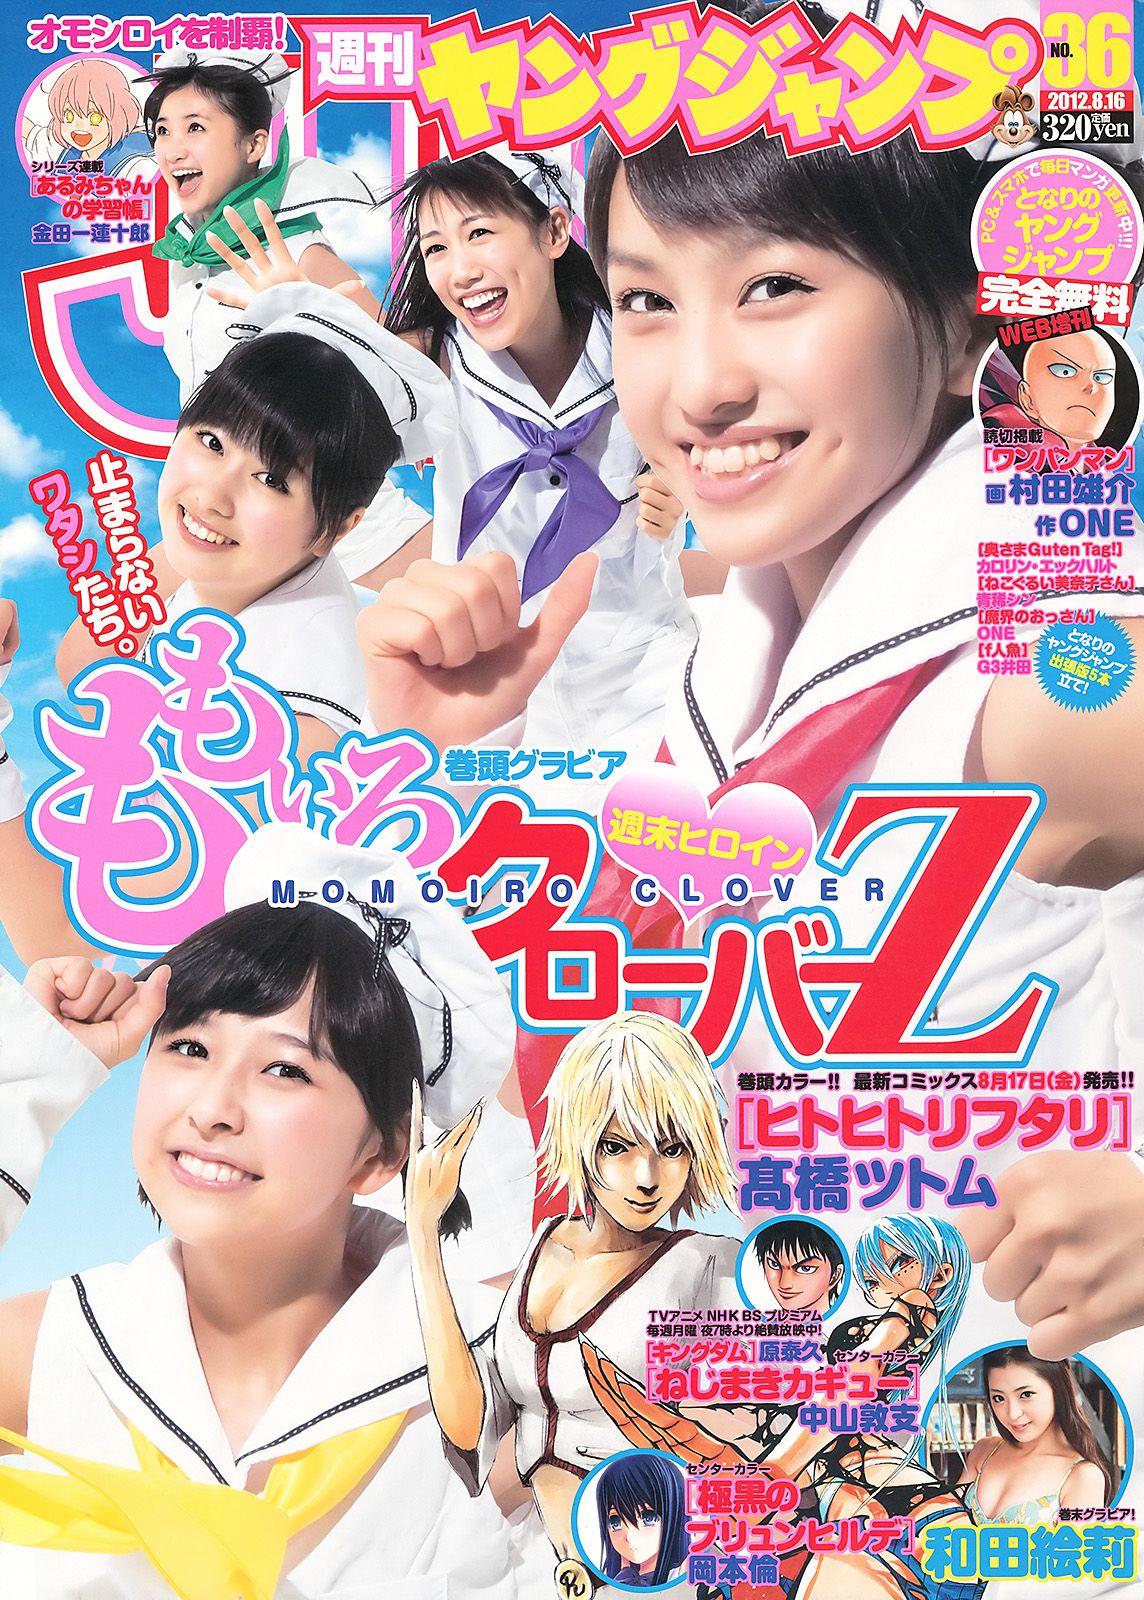 も も い ろ ク ロ ー バ ー Ｚ Wada 絵 莉 [Weekly Young Jump] 2012 No.36 Revista fotográfica Página 2 No.db8f16